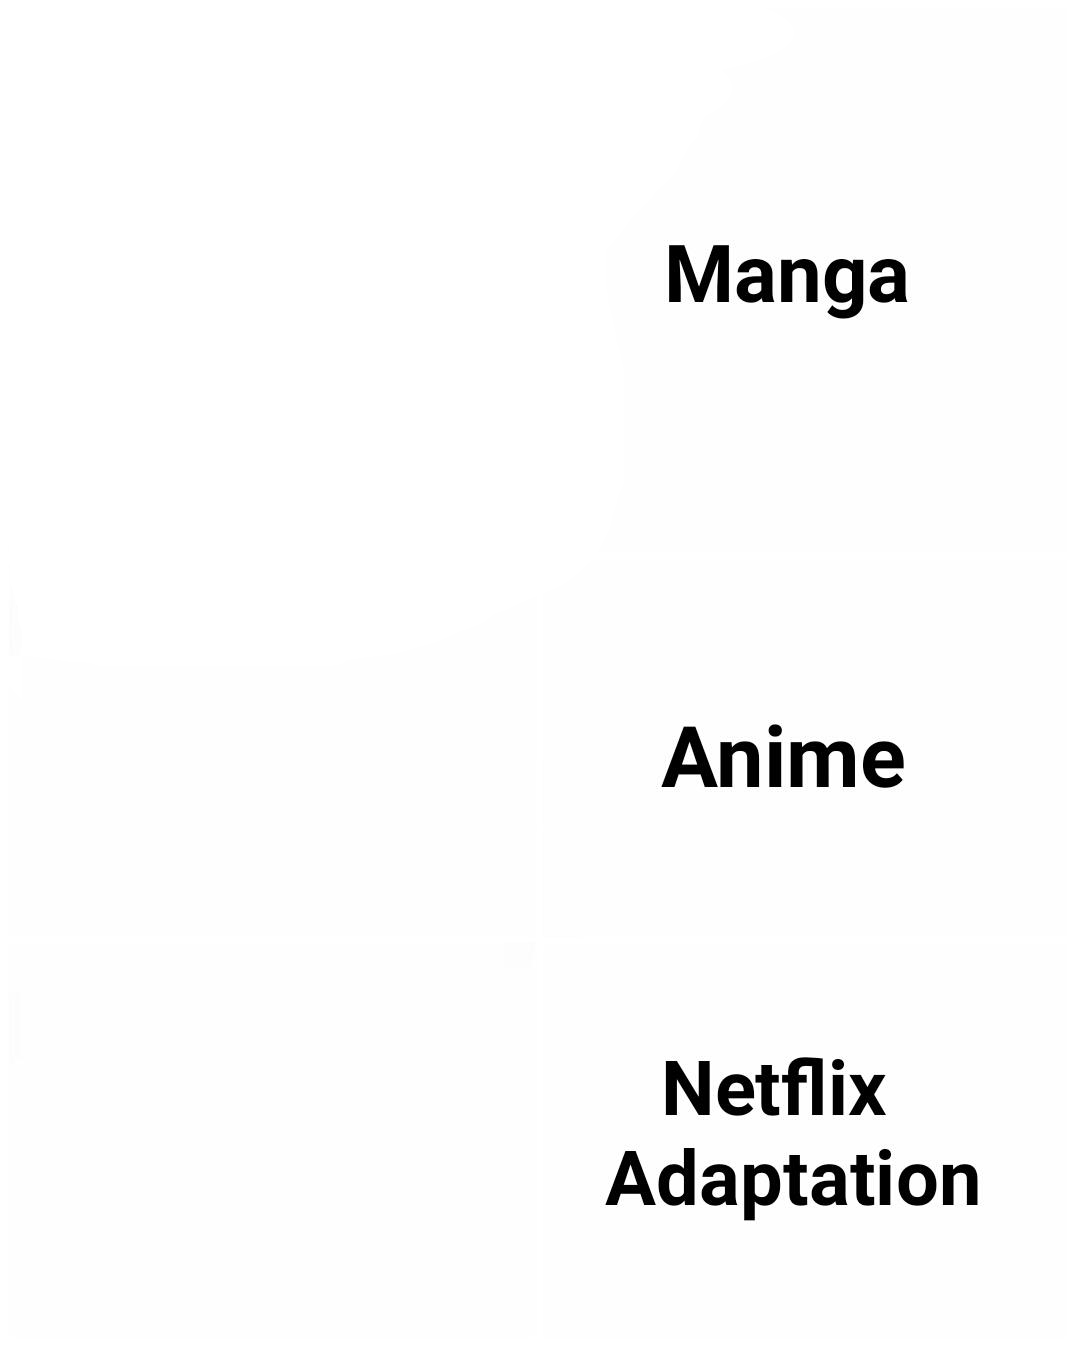 netflix adaptation meme template Blank Meme Template